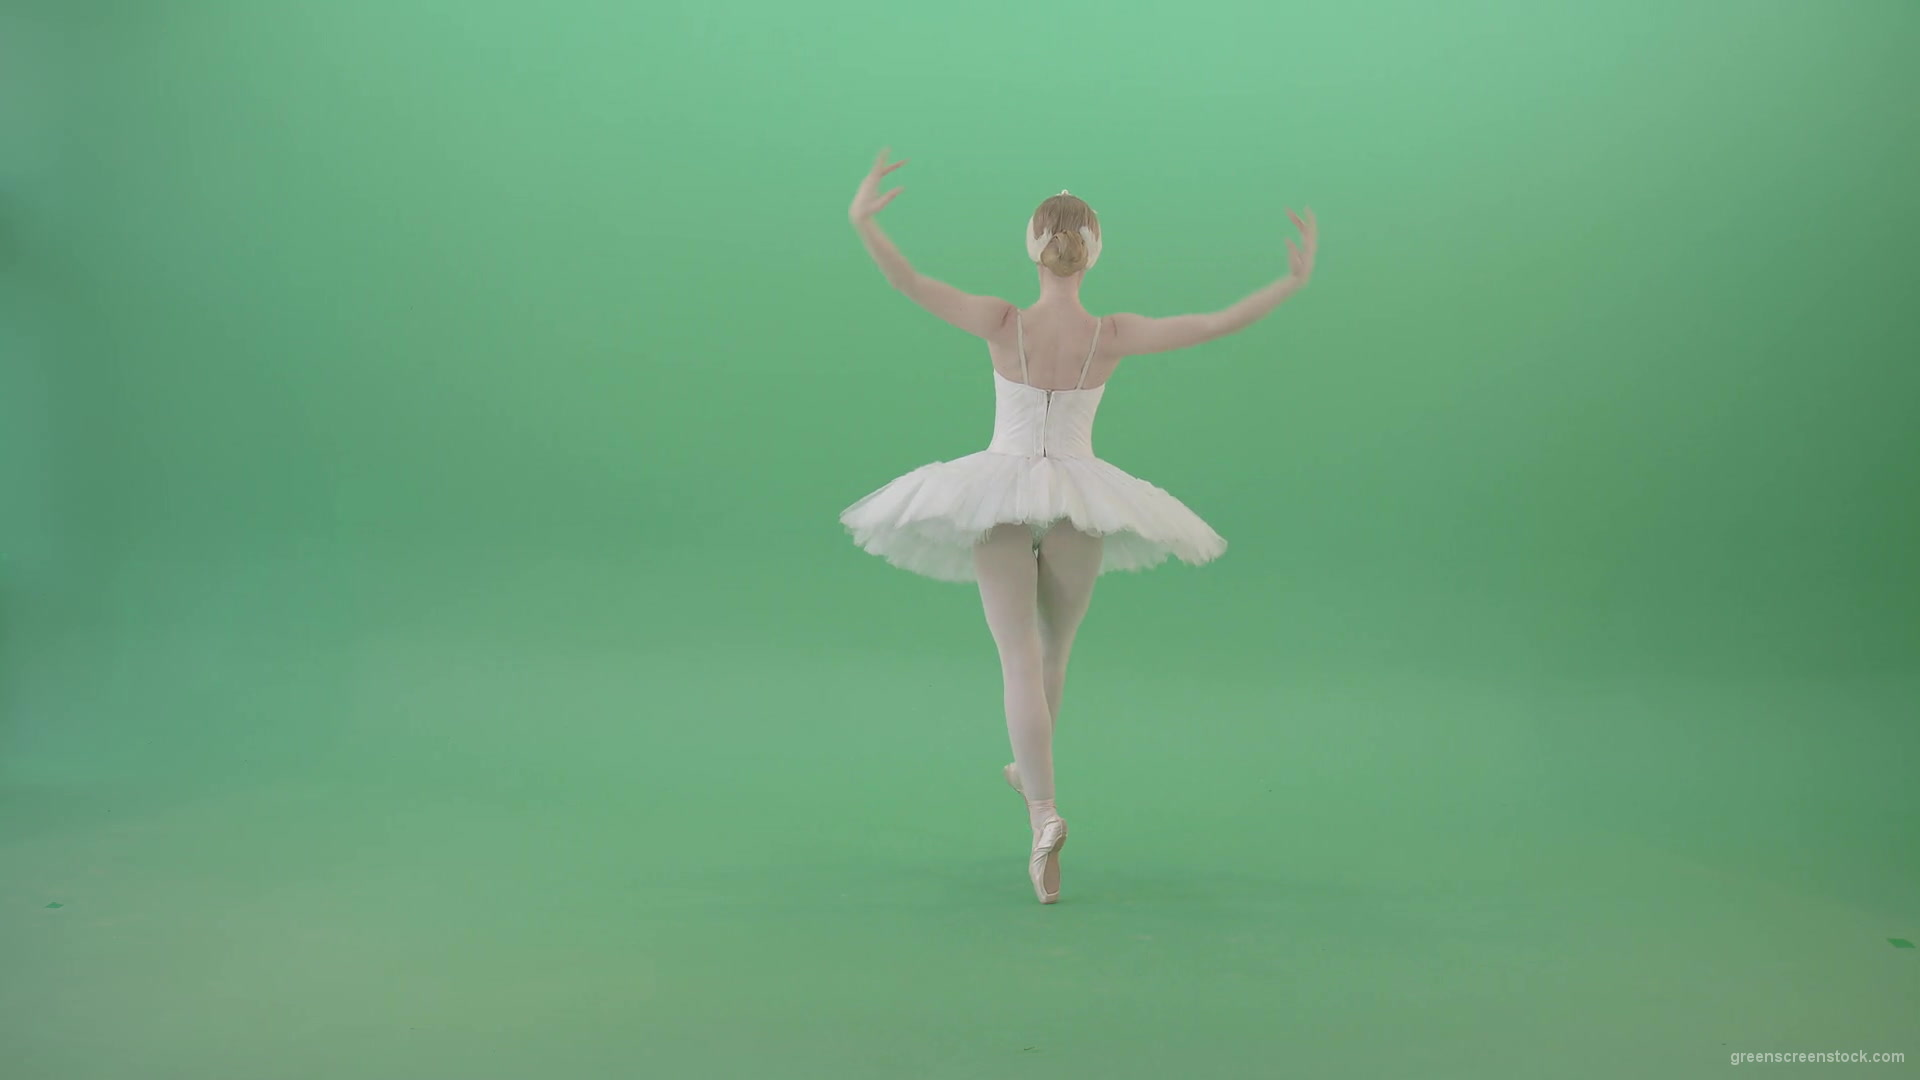 Beautiful-swan-lake-ballet-dance-ballerina-in-back-side-view-dancing-on-green-screen-4K-Video-Footage-1920_008 Green Screen Stock